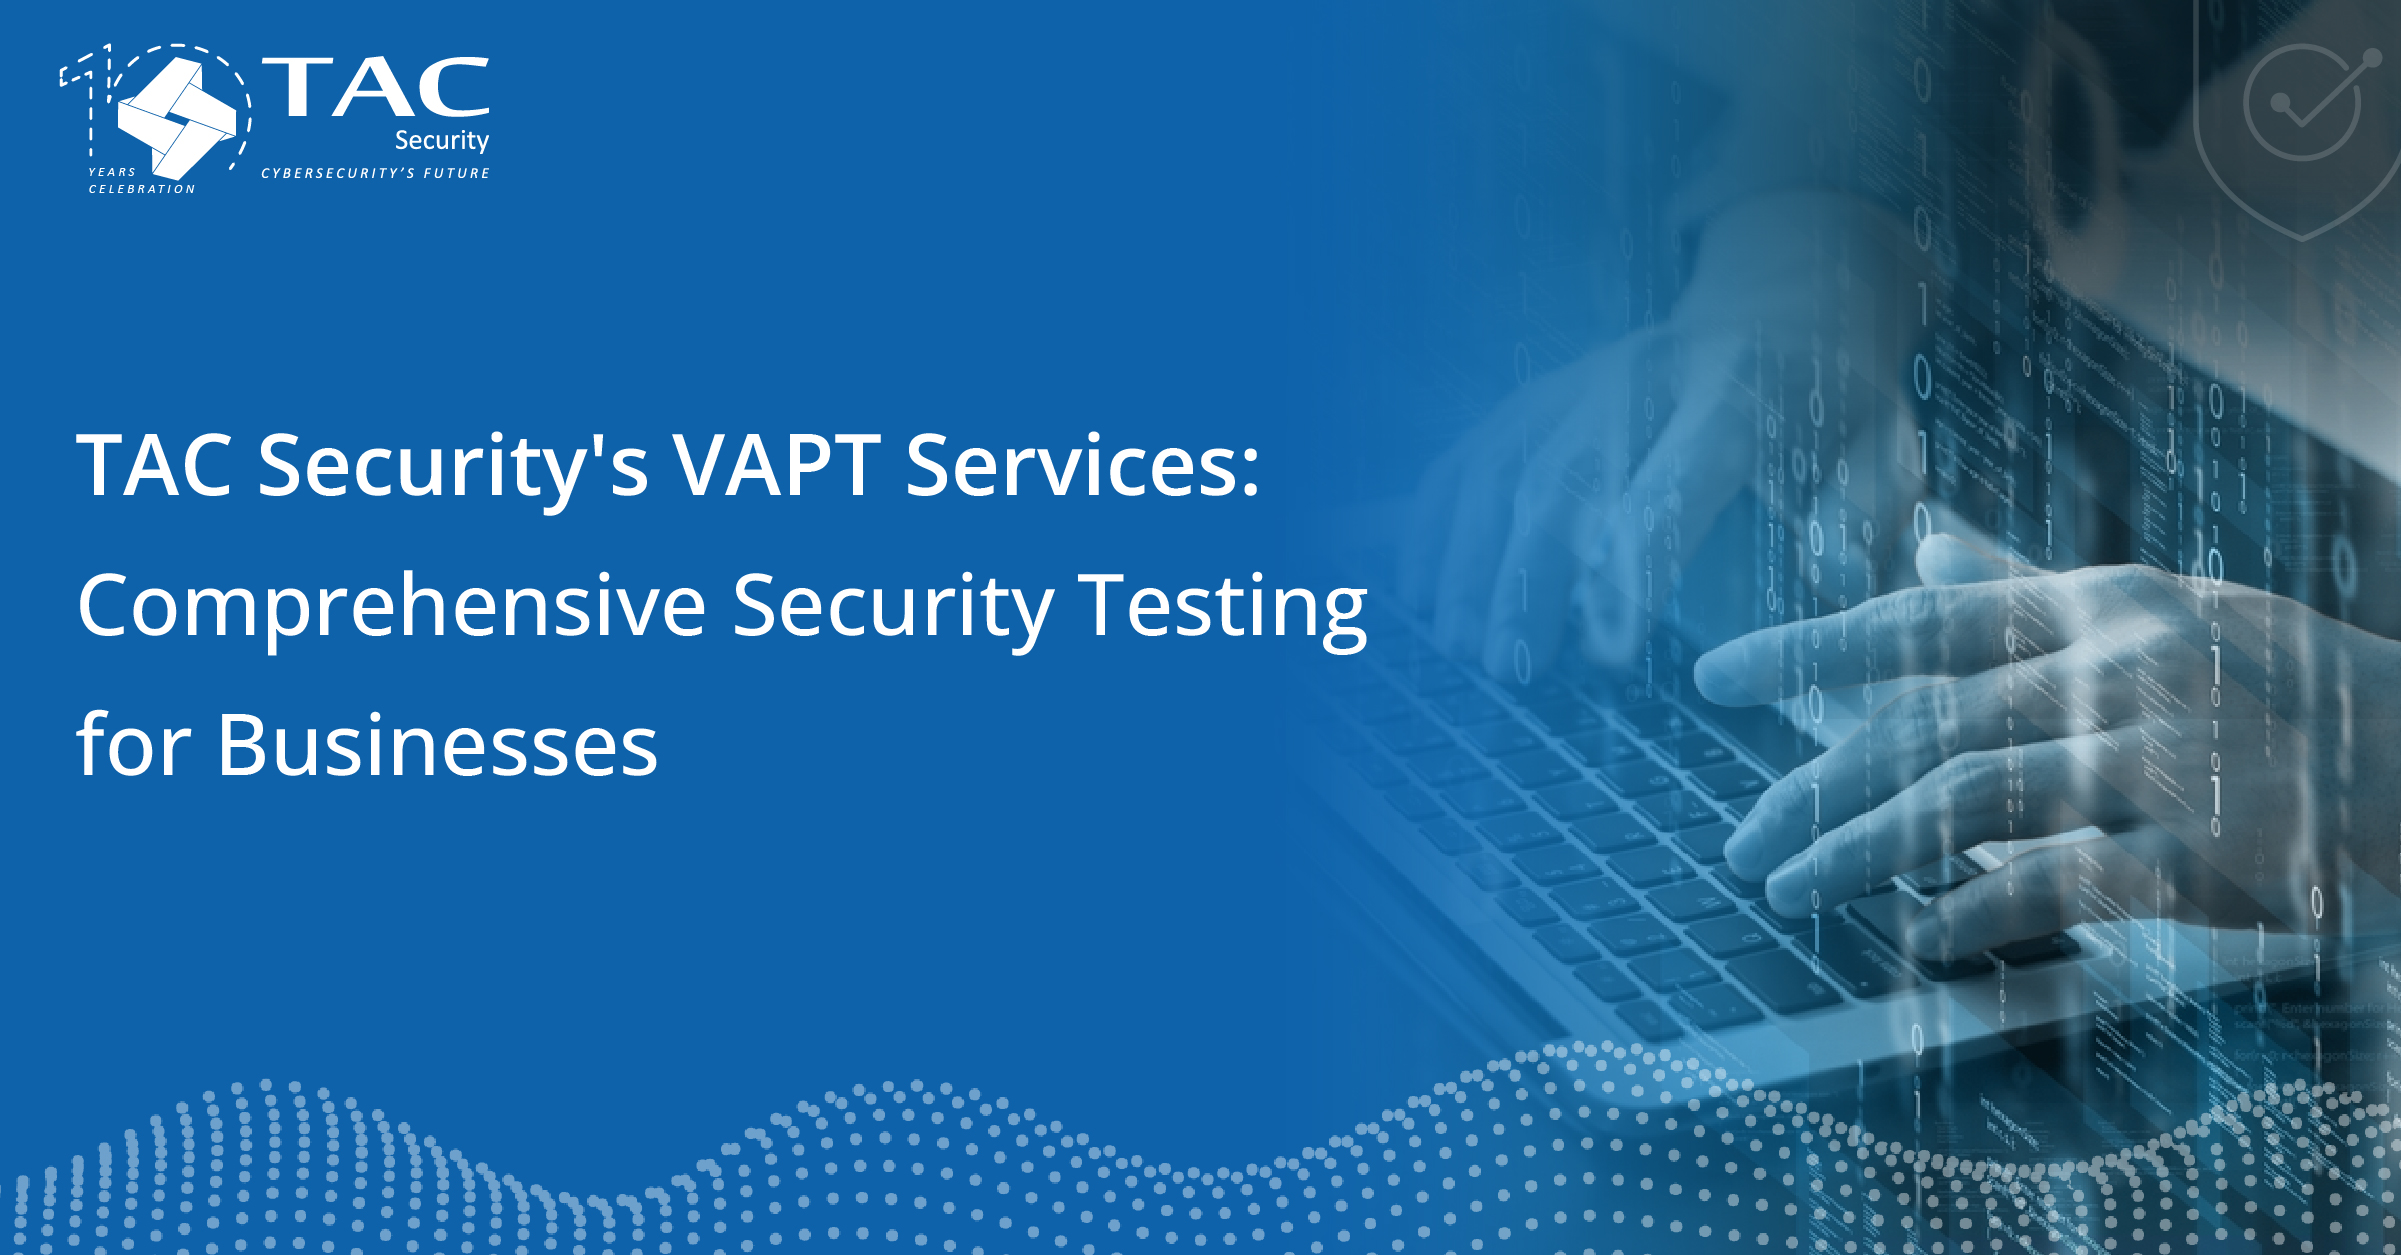 Vulnerability assessment penetration testing services